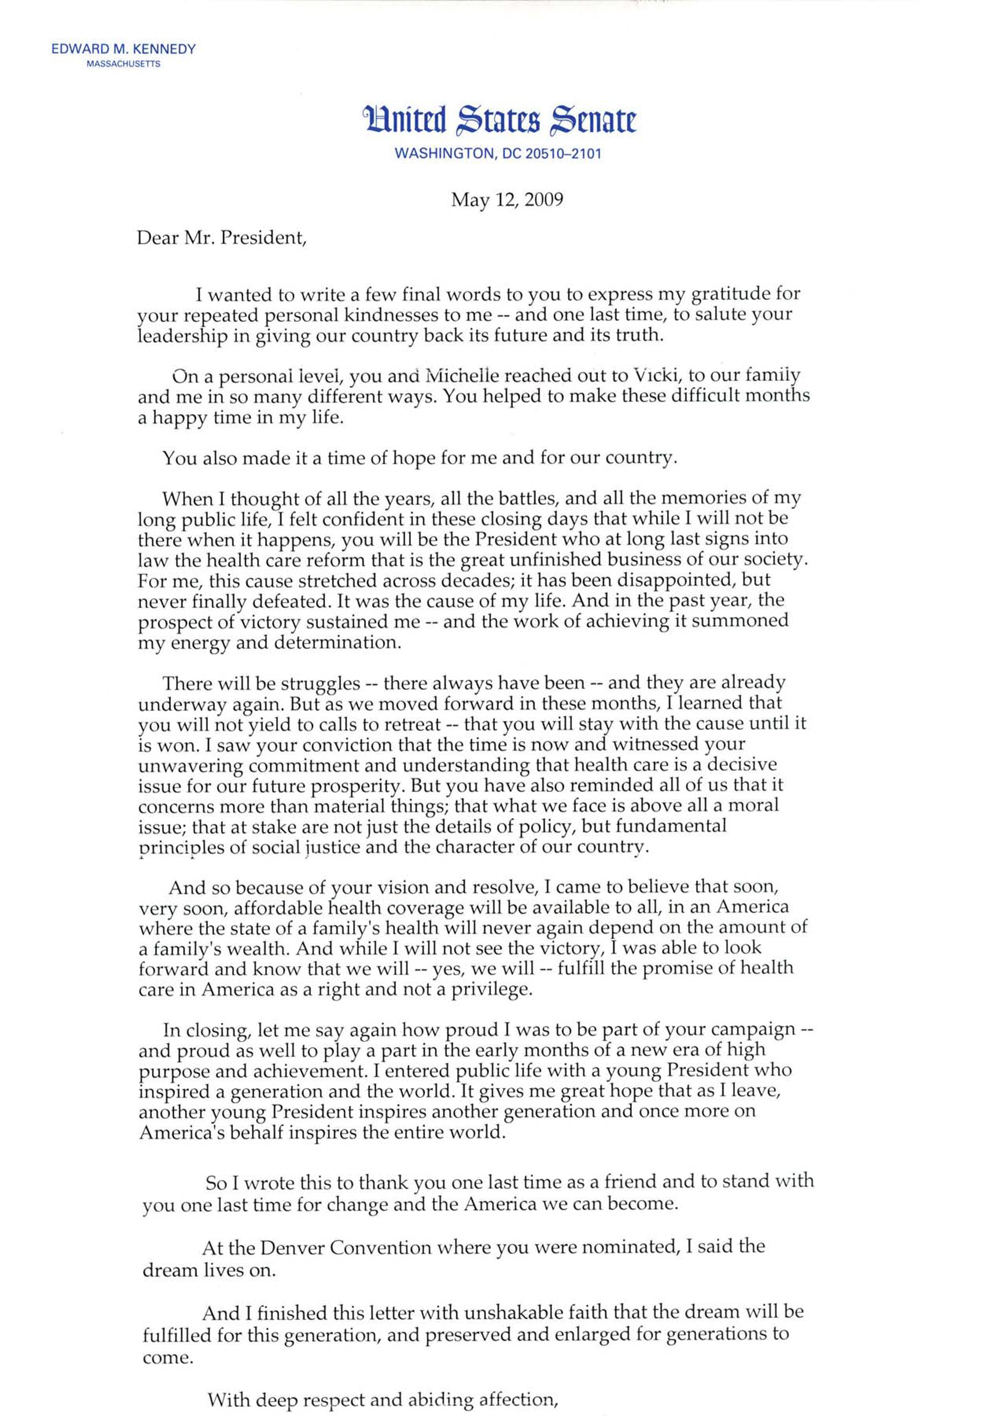 Read the full letter from Sen. Kennedy here.